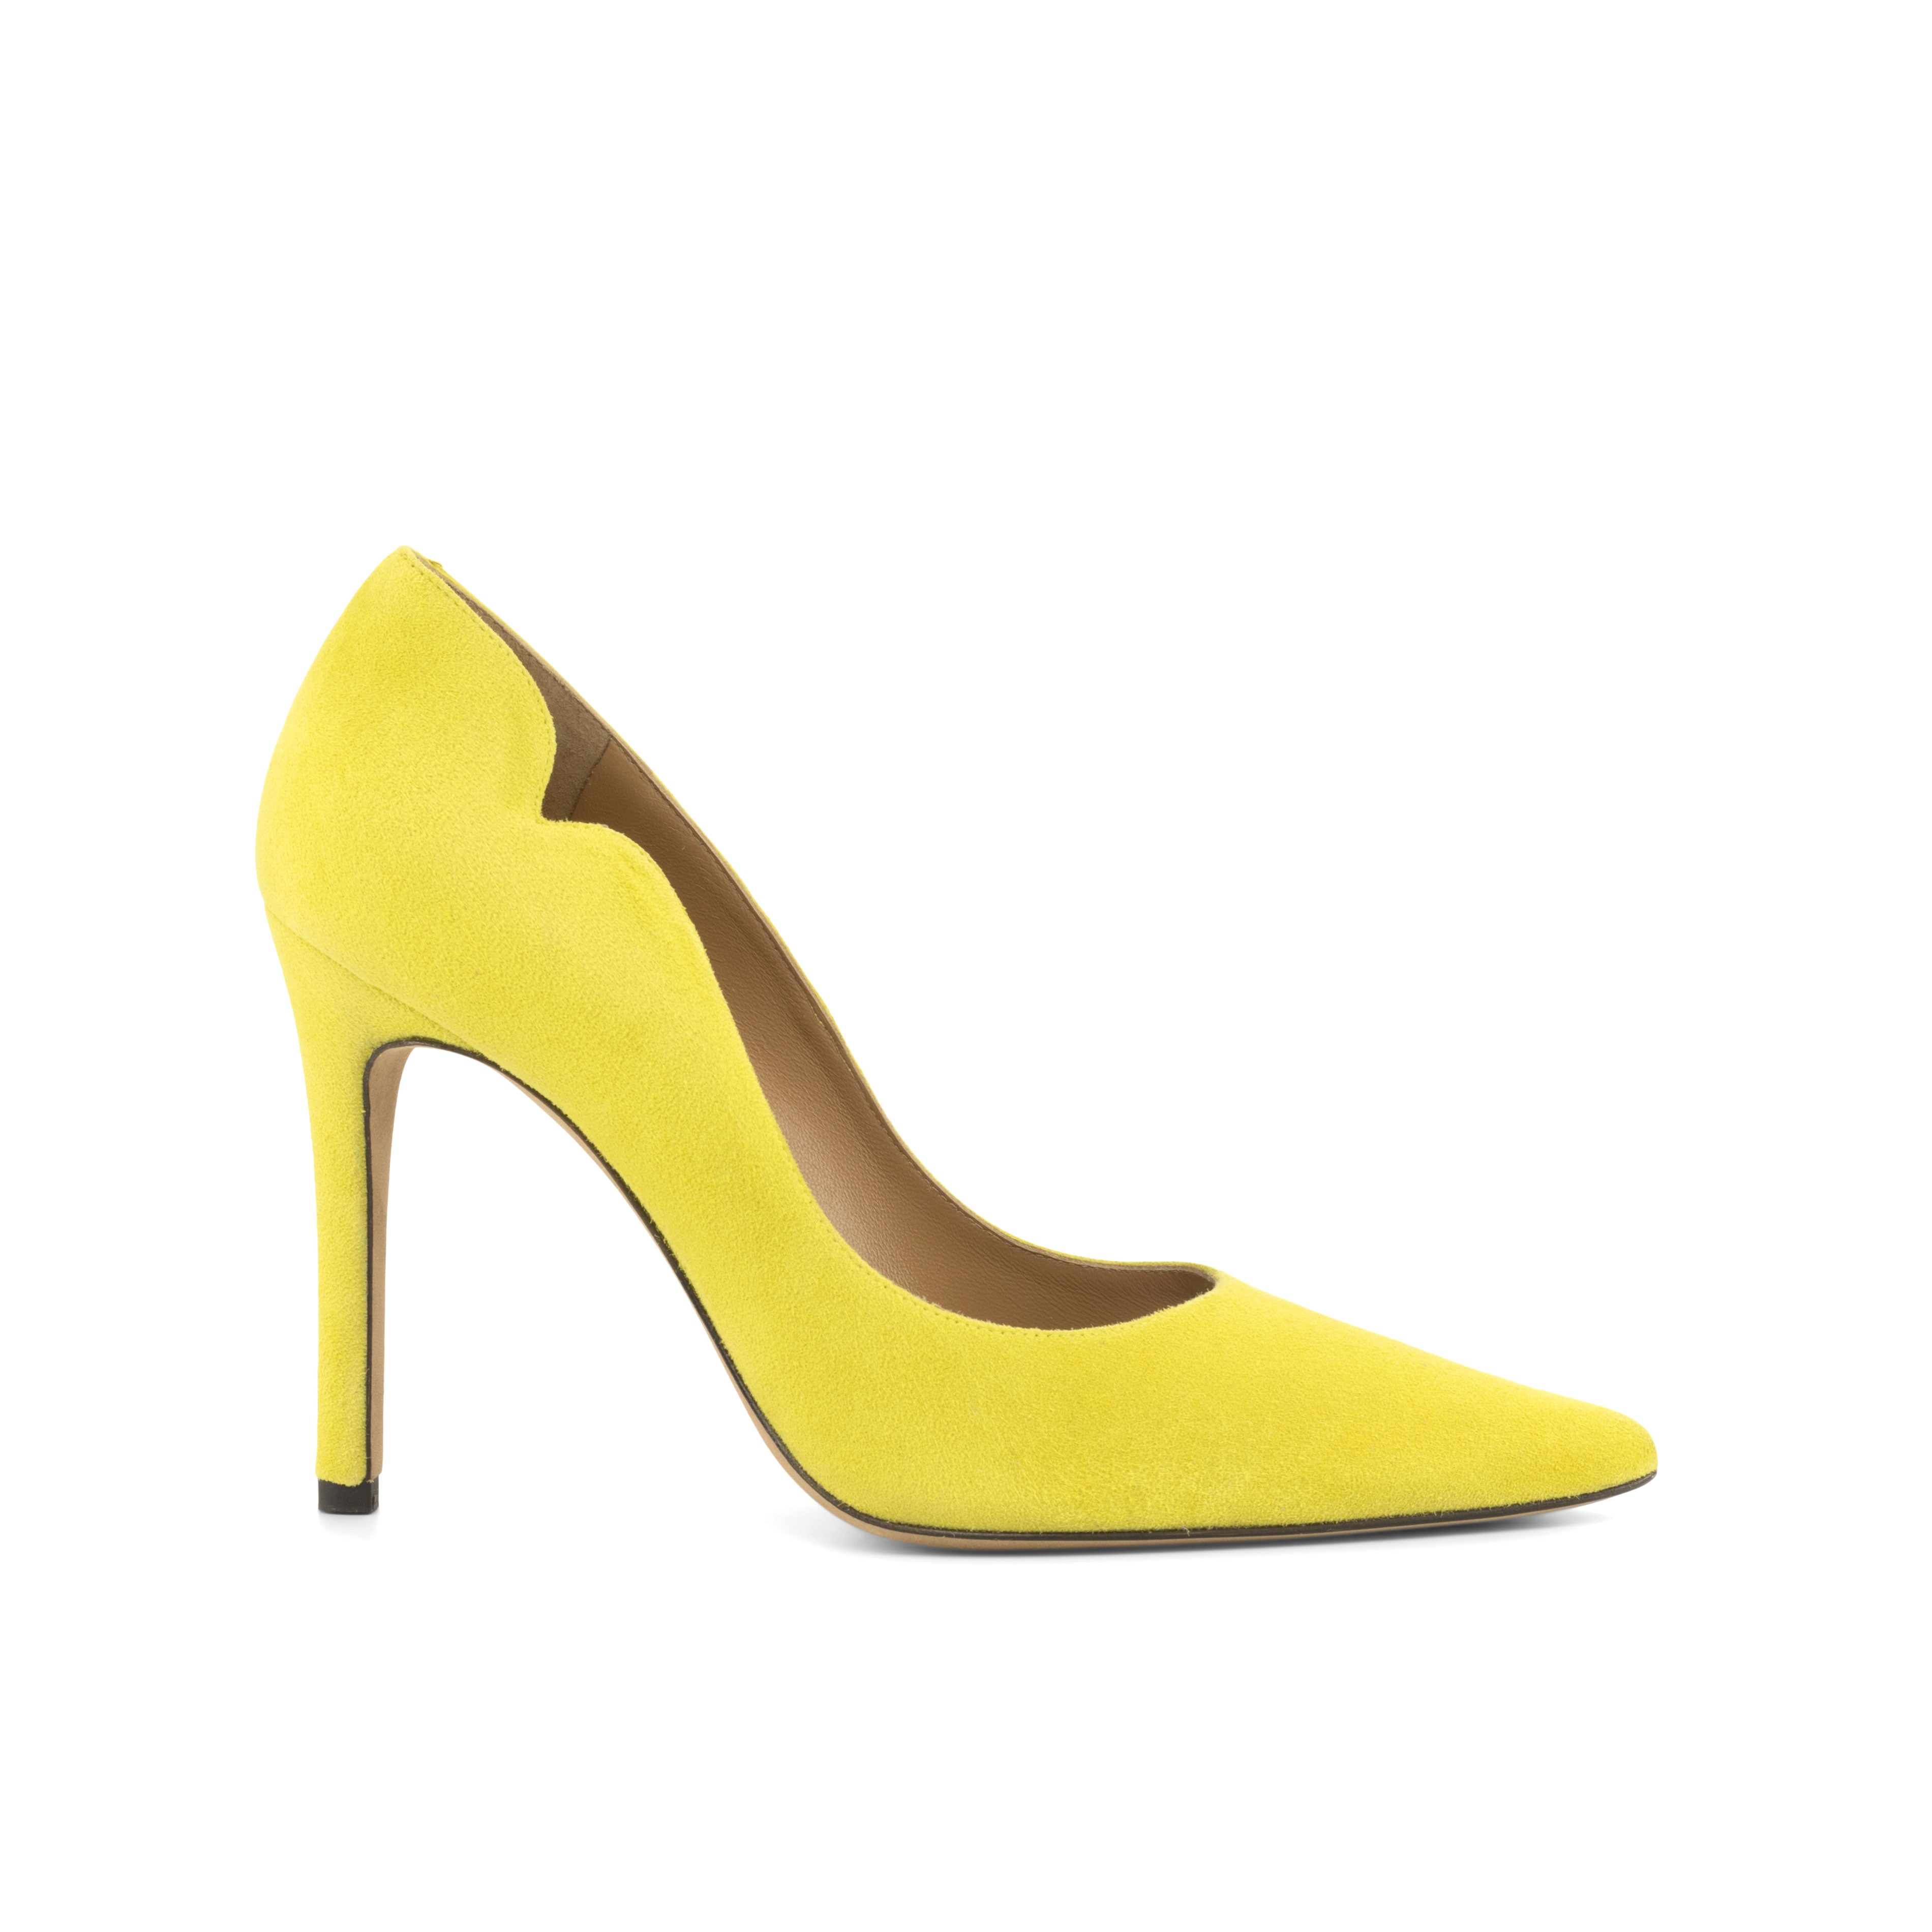 Legs up yellow shoes Stock Photo by ©alanpoulson 11965267